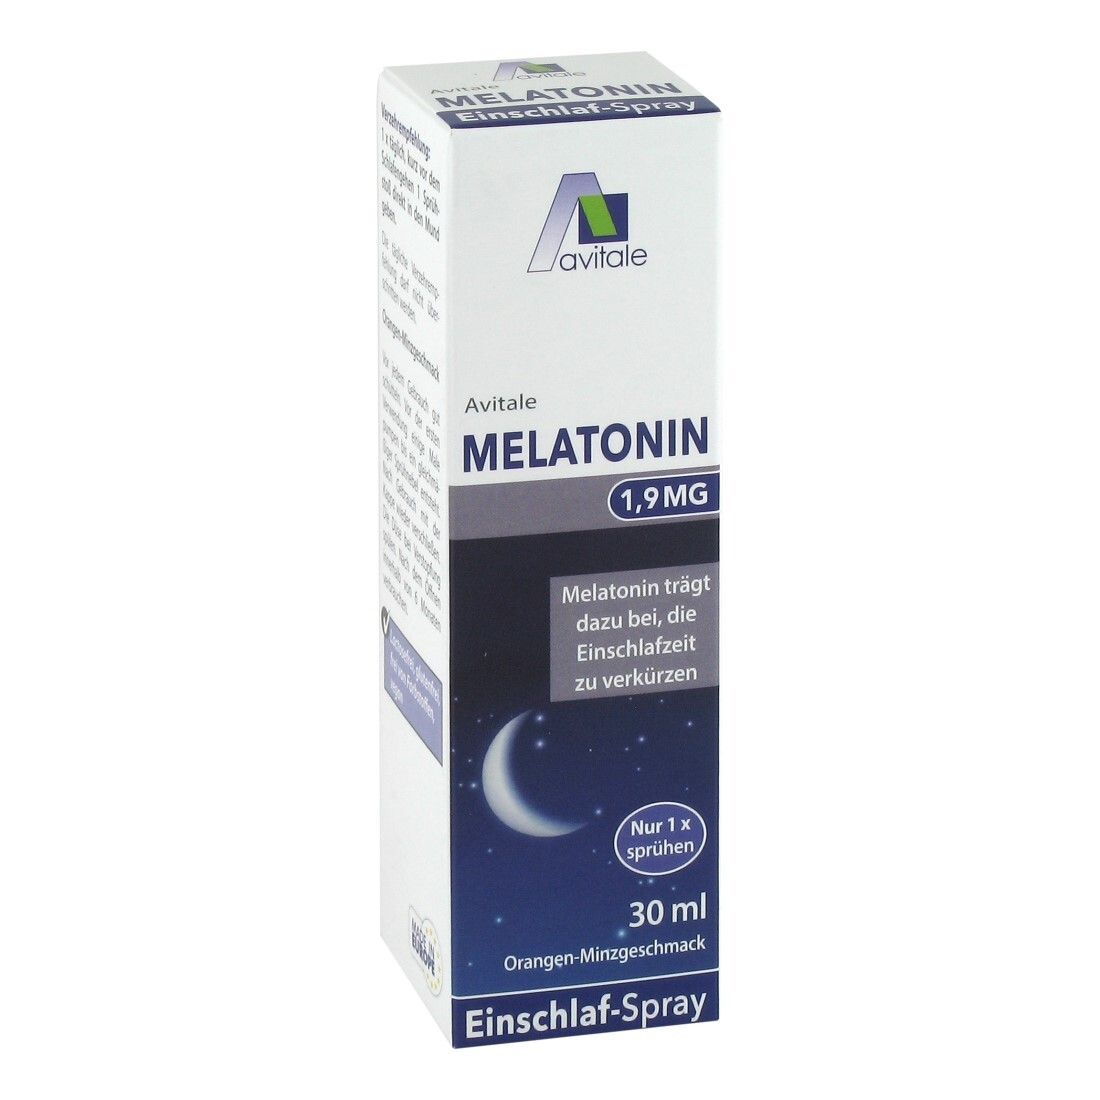 Avital melatonin 1.9 mg asleep spray